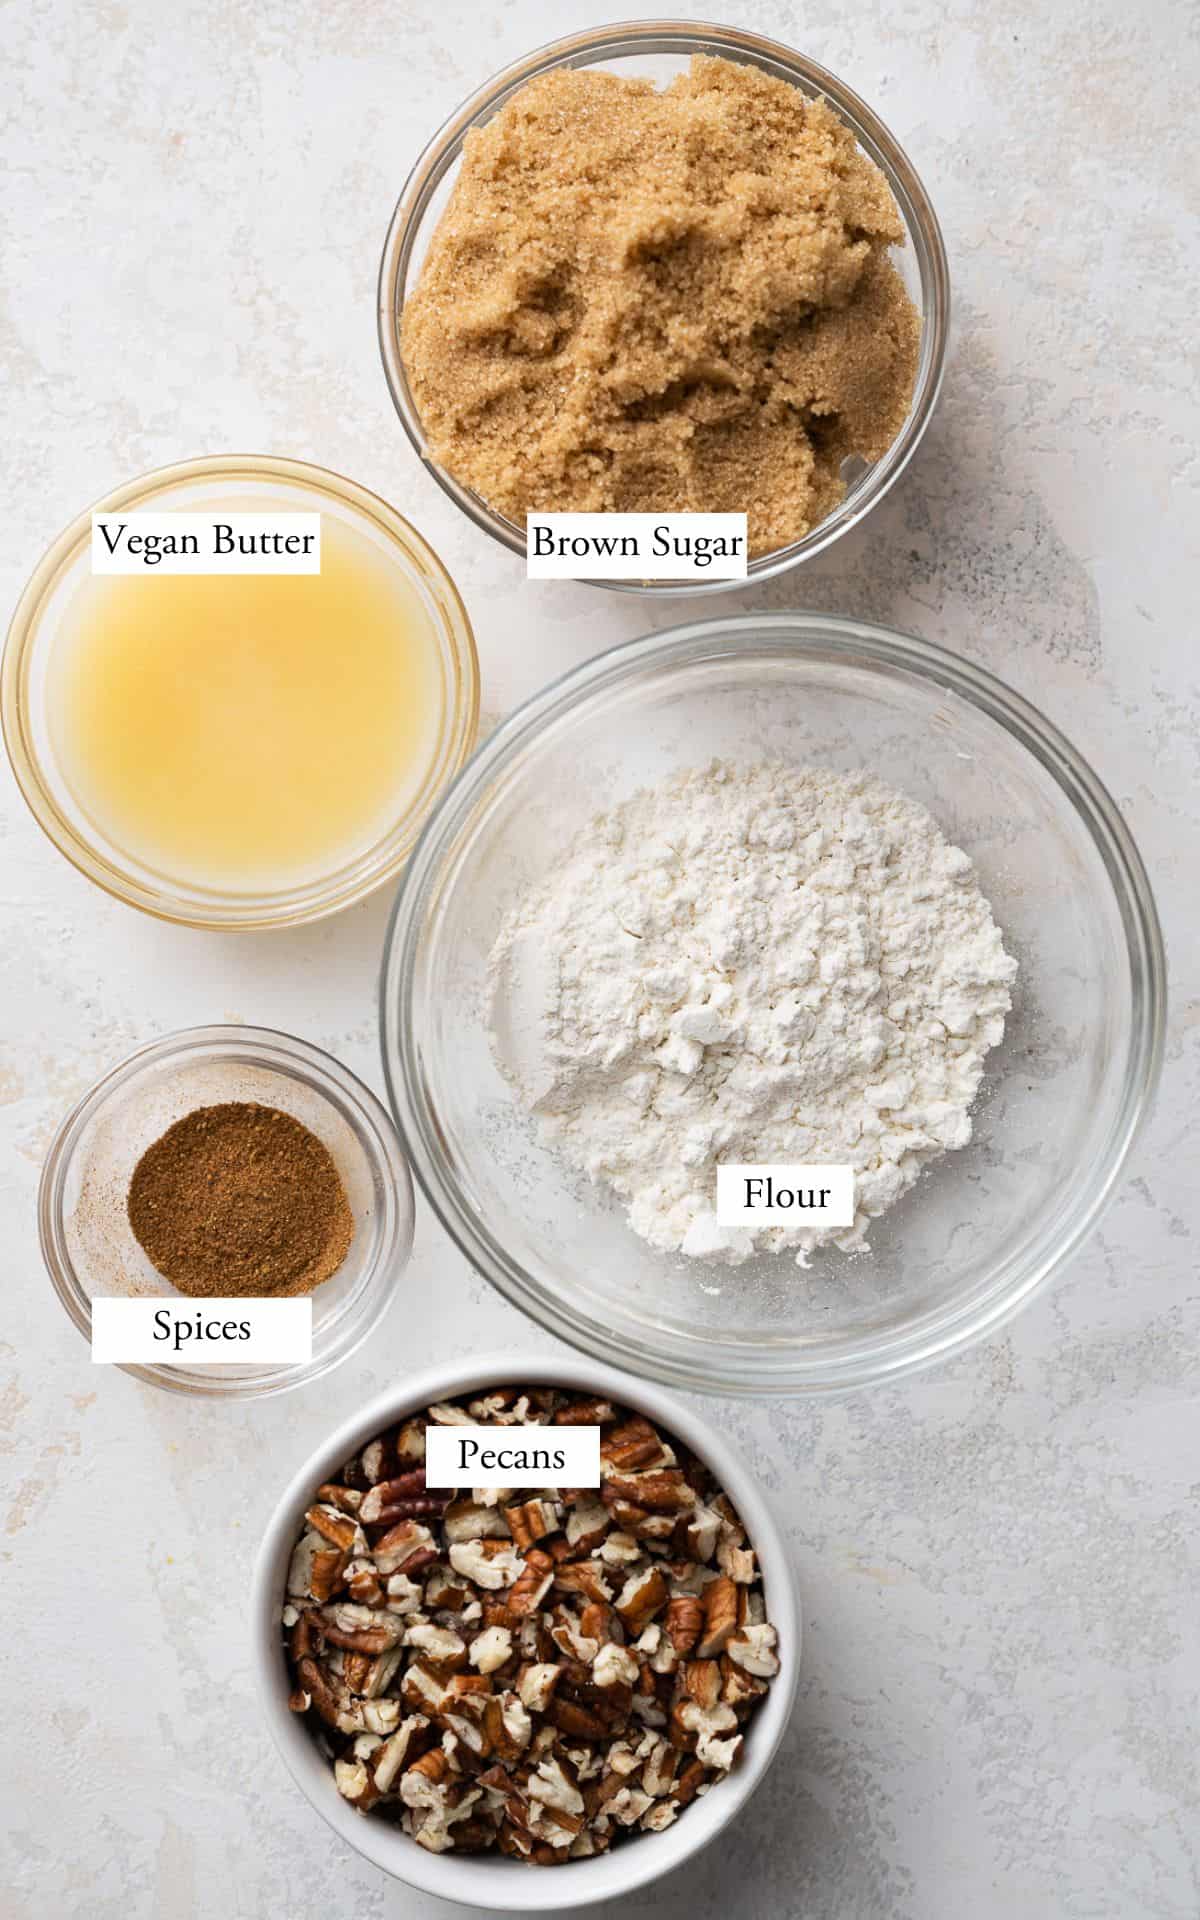 pecan streusel ingredients: pecans, flour, vegan butter, brown sugar, and spices.